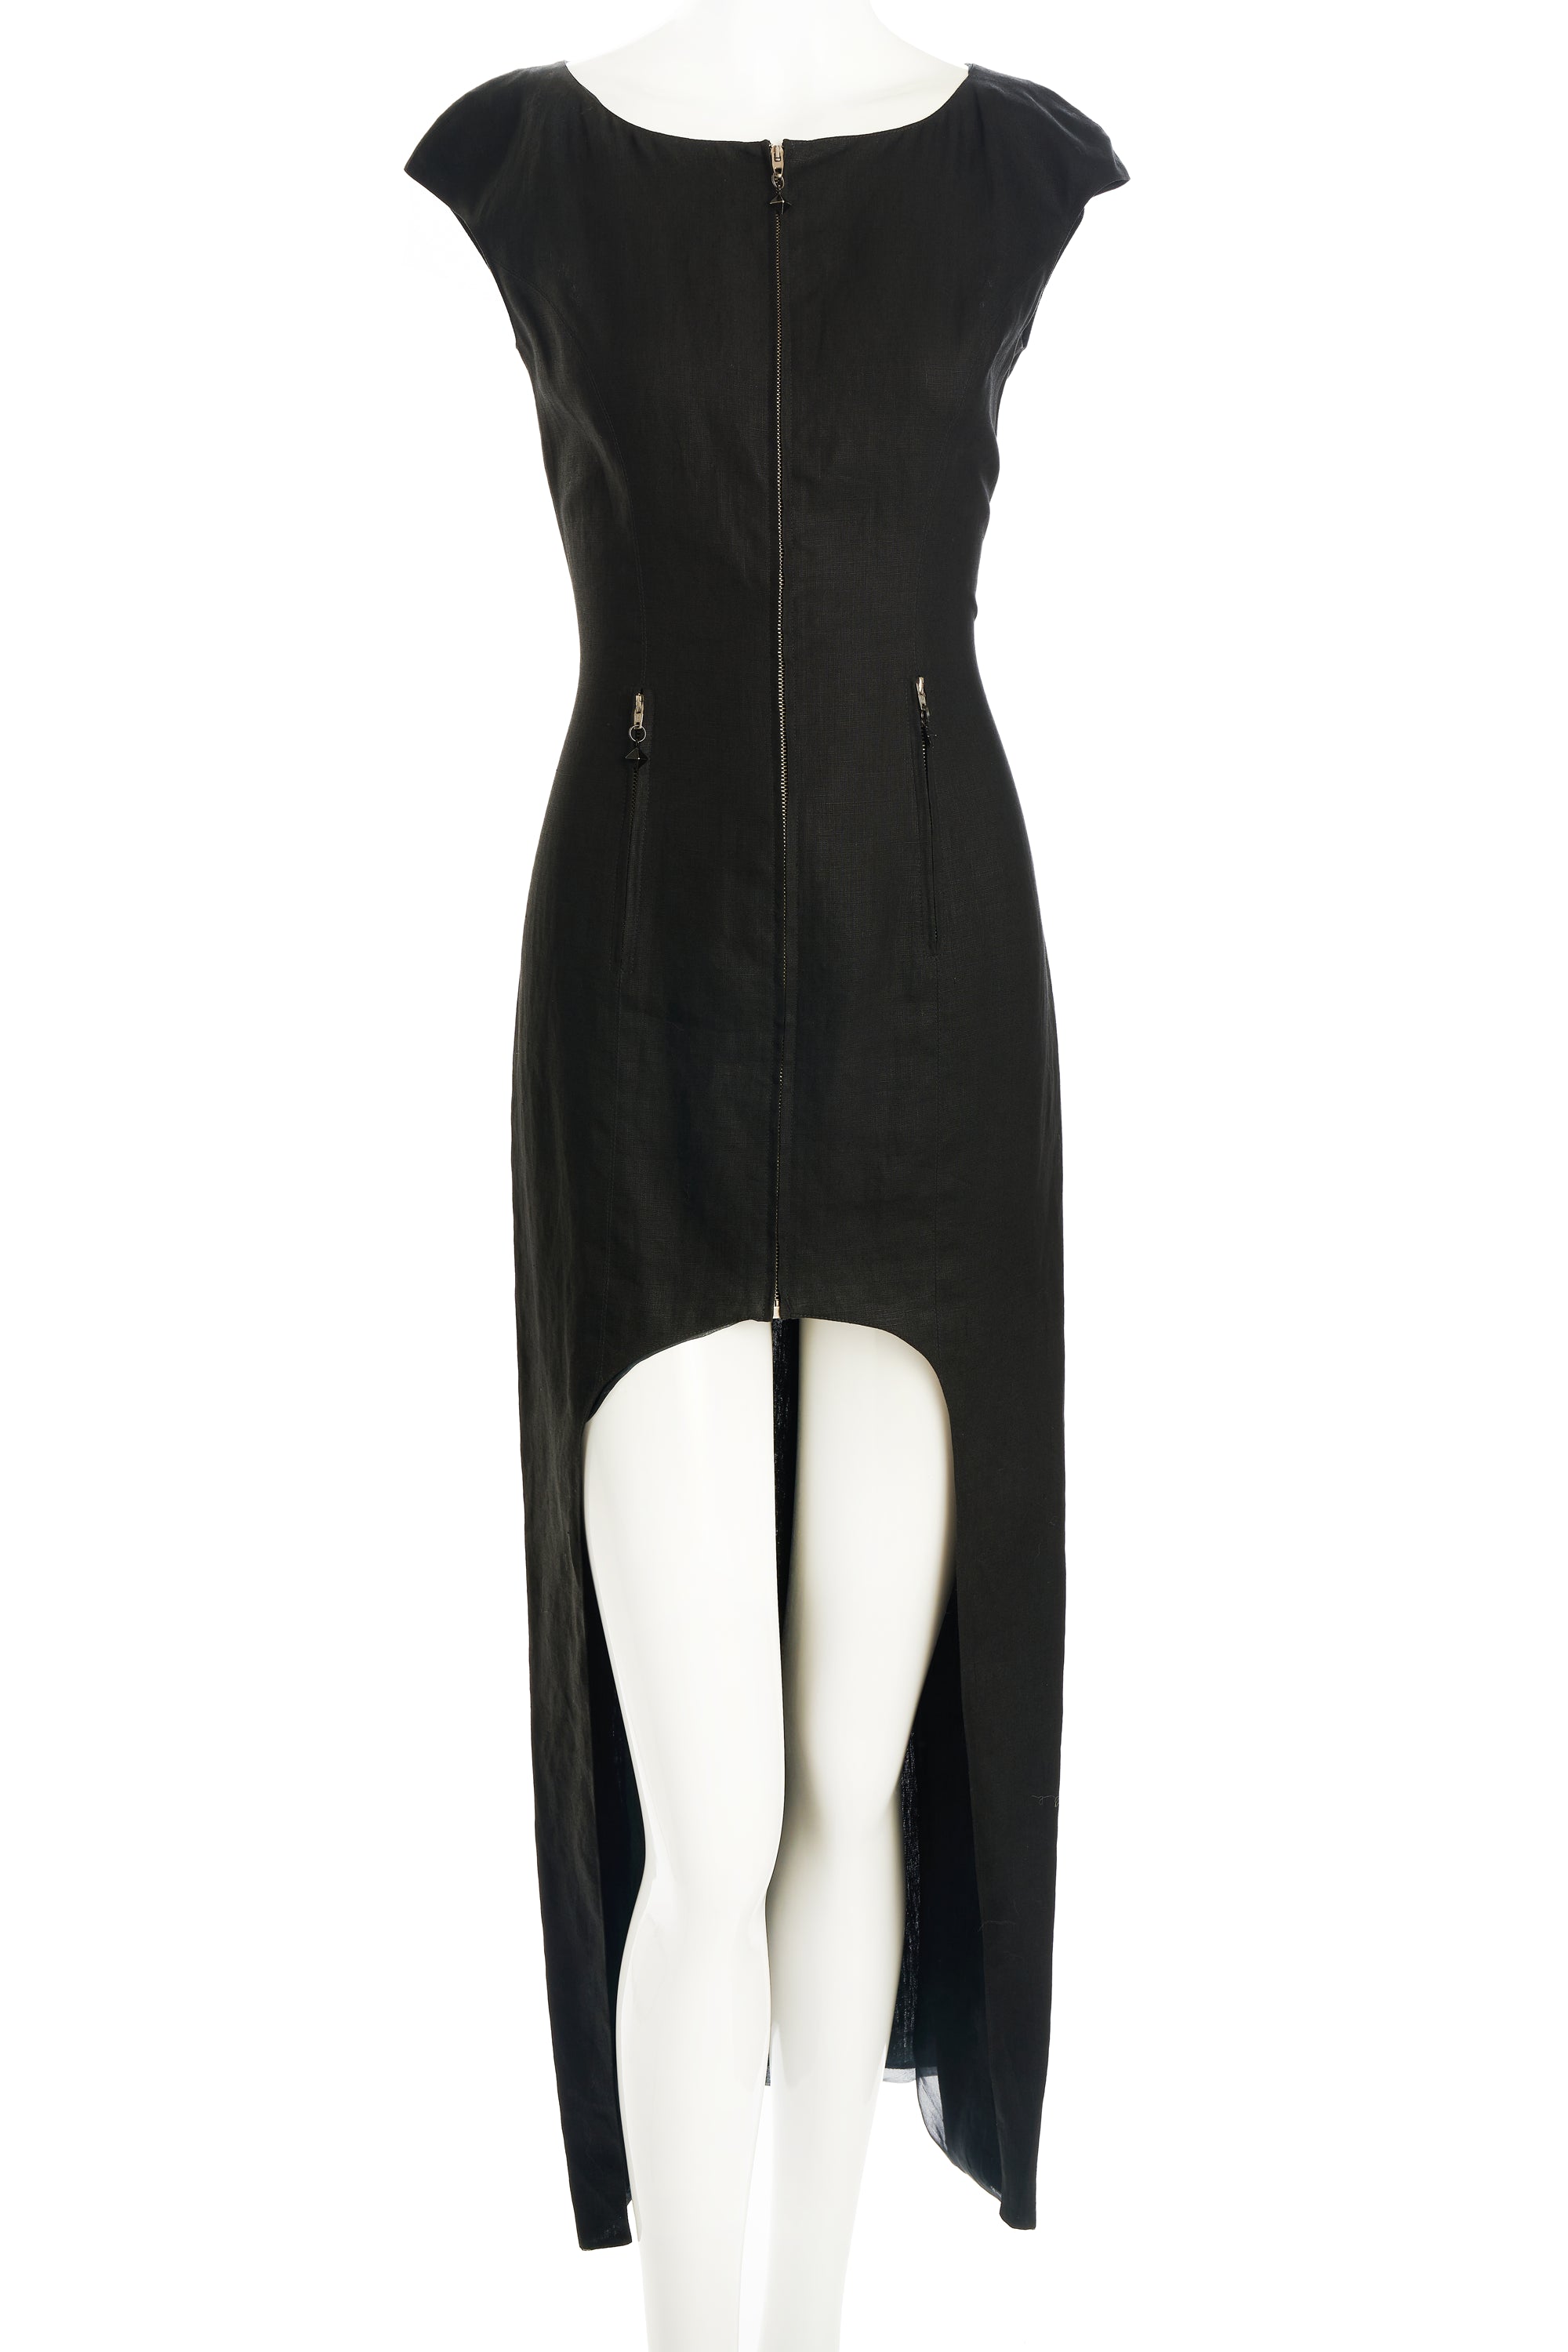 Montana Hi/Lo Black Linen Sleeveless Dress Size 40/6